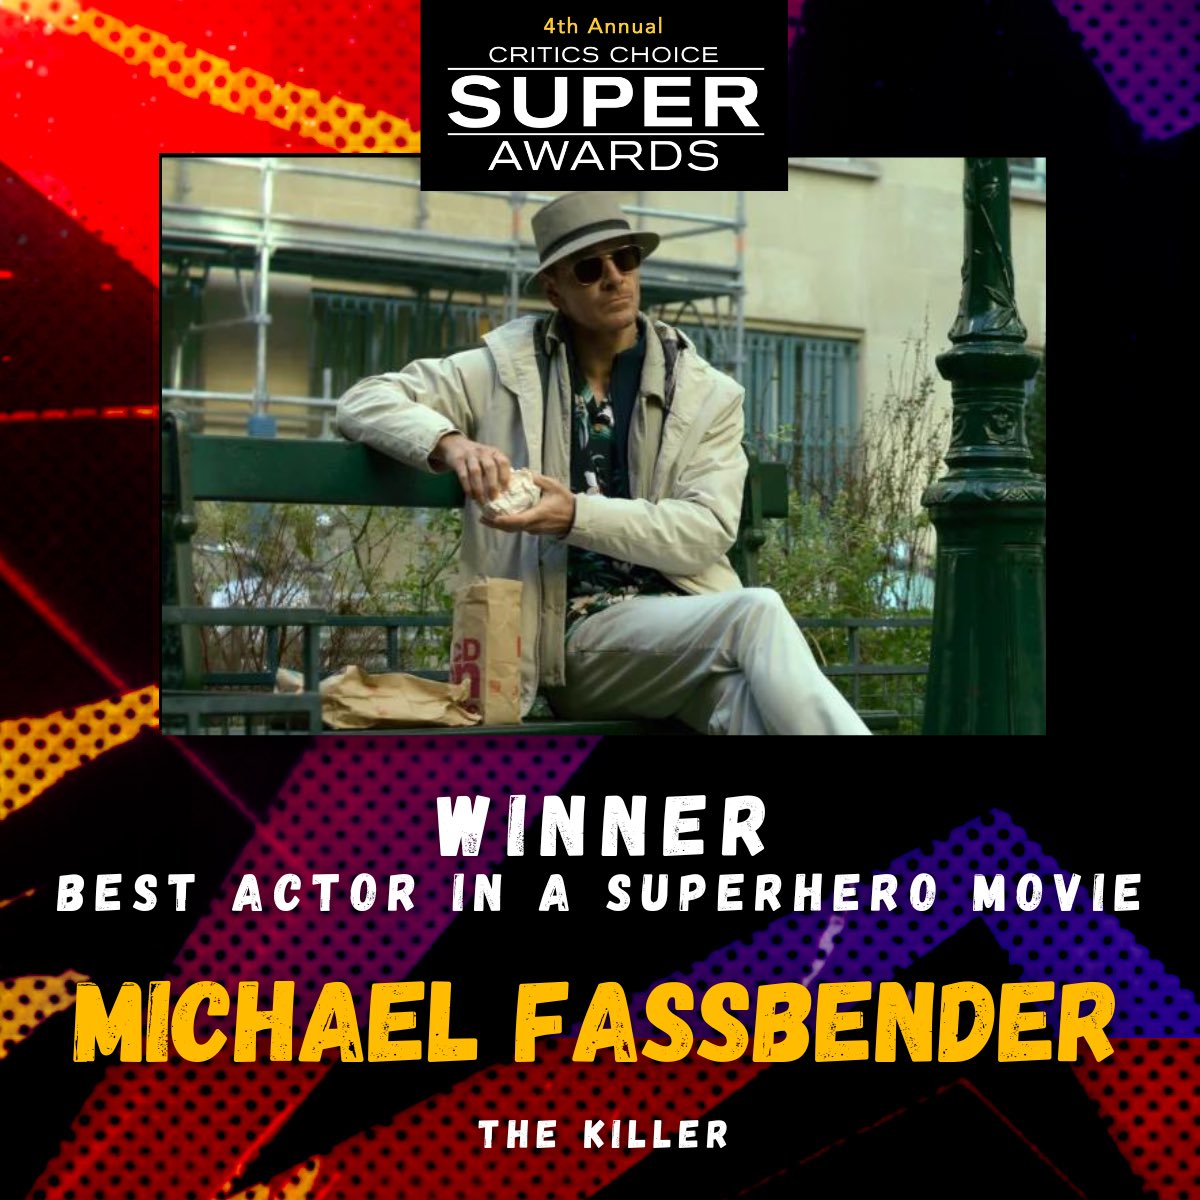 via @CriticsChoice 

Congratulations to Michael Fassbender – “The Killer!” 

The actor has won the Critics Choice SUPER AWARD for BEST ACTOR IN A SUPERHERO MOVIE!⭐️📷📷 

#CCSuperAwards #MichaelFassbender #TheKiller #CriticsChoice